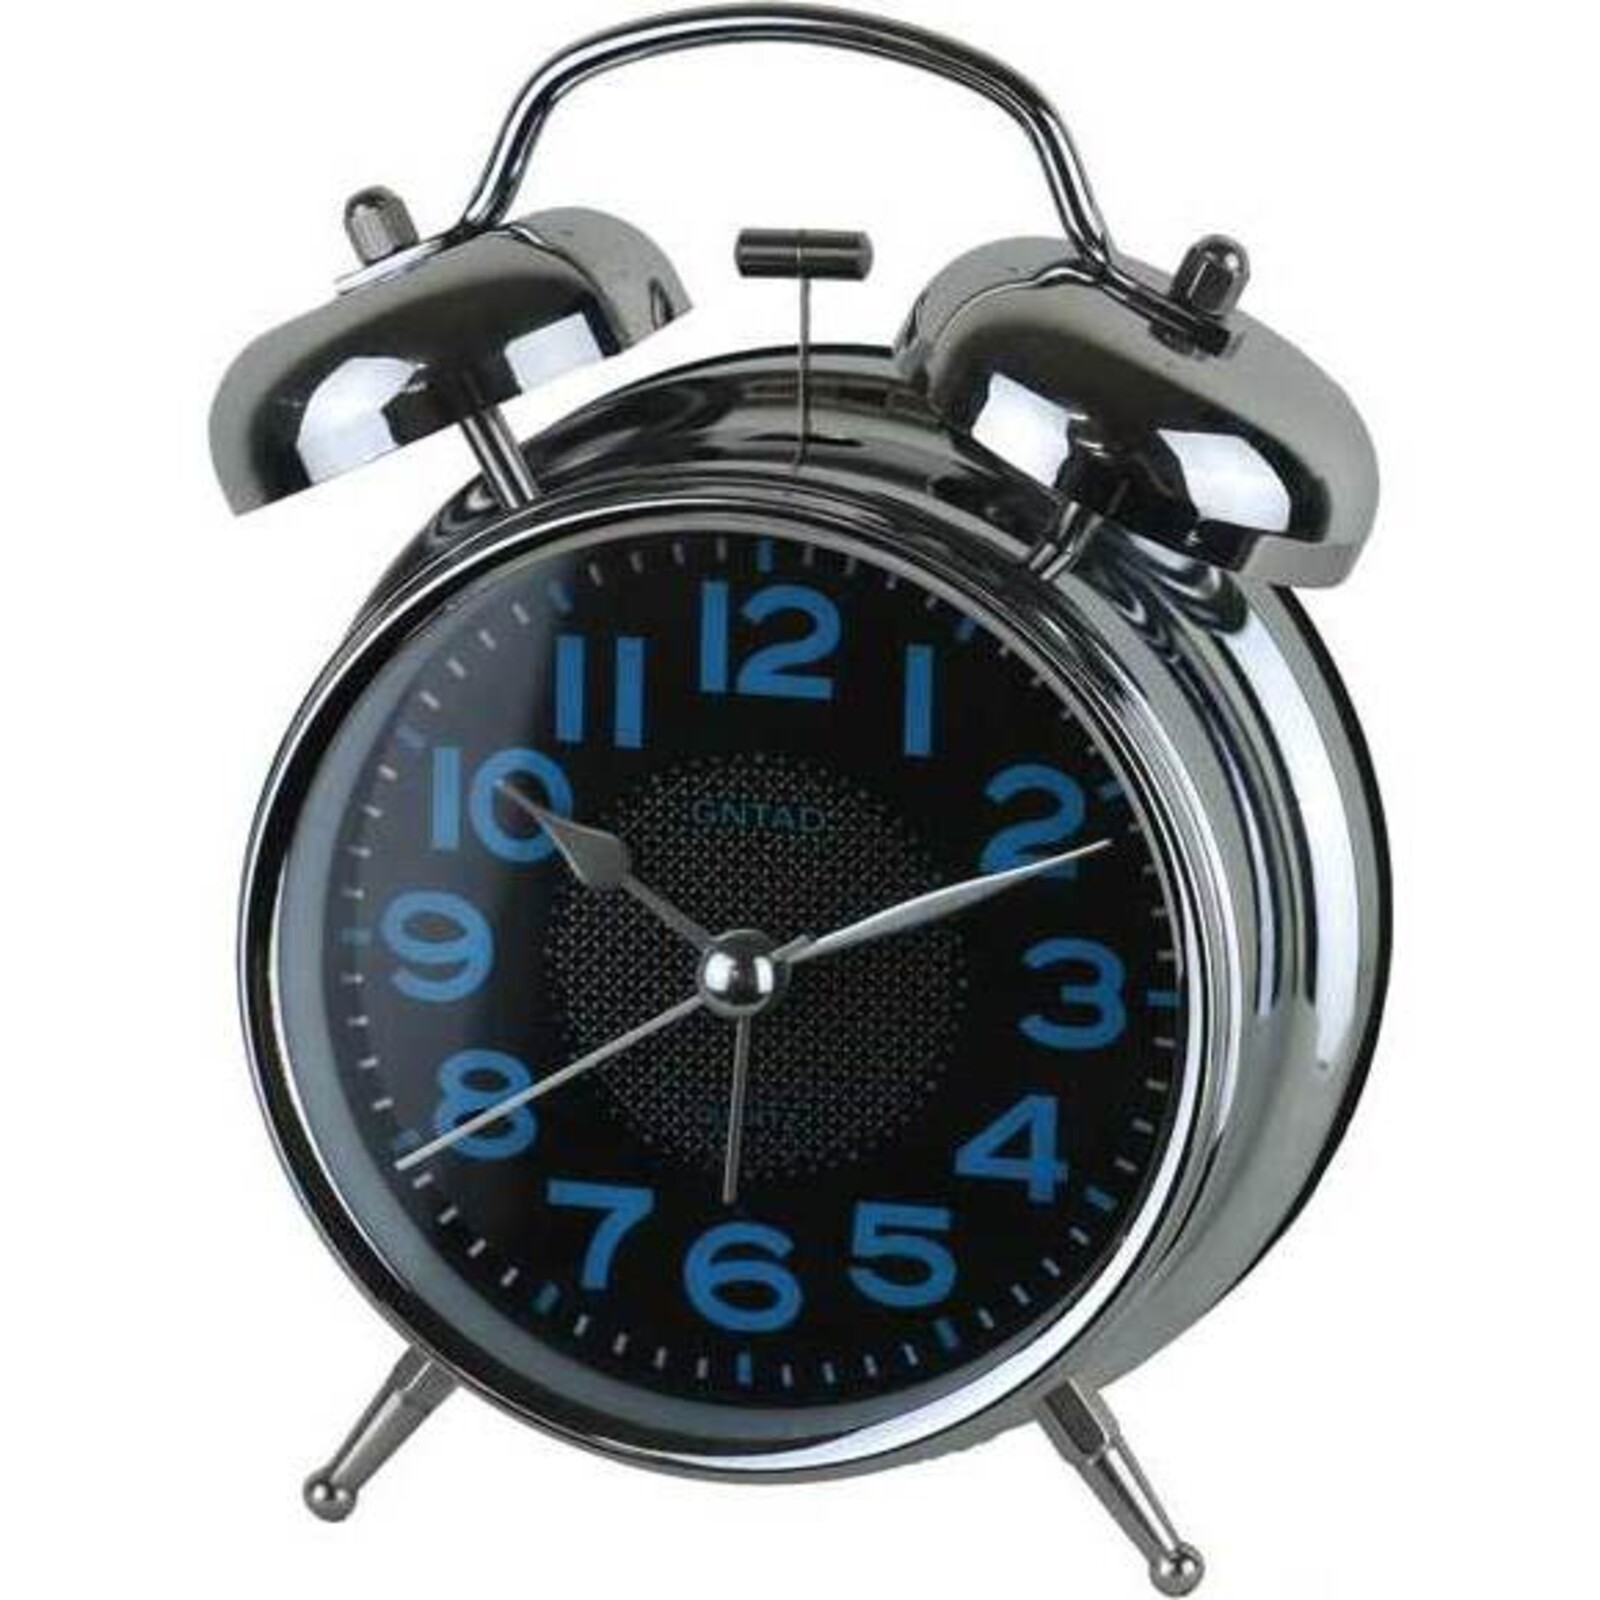 Alarm Clock Blue